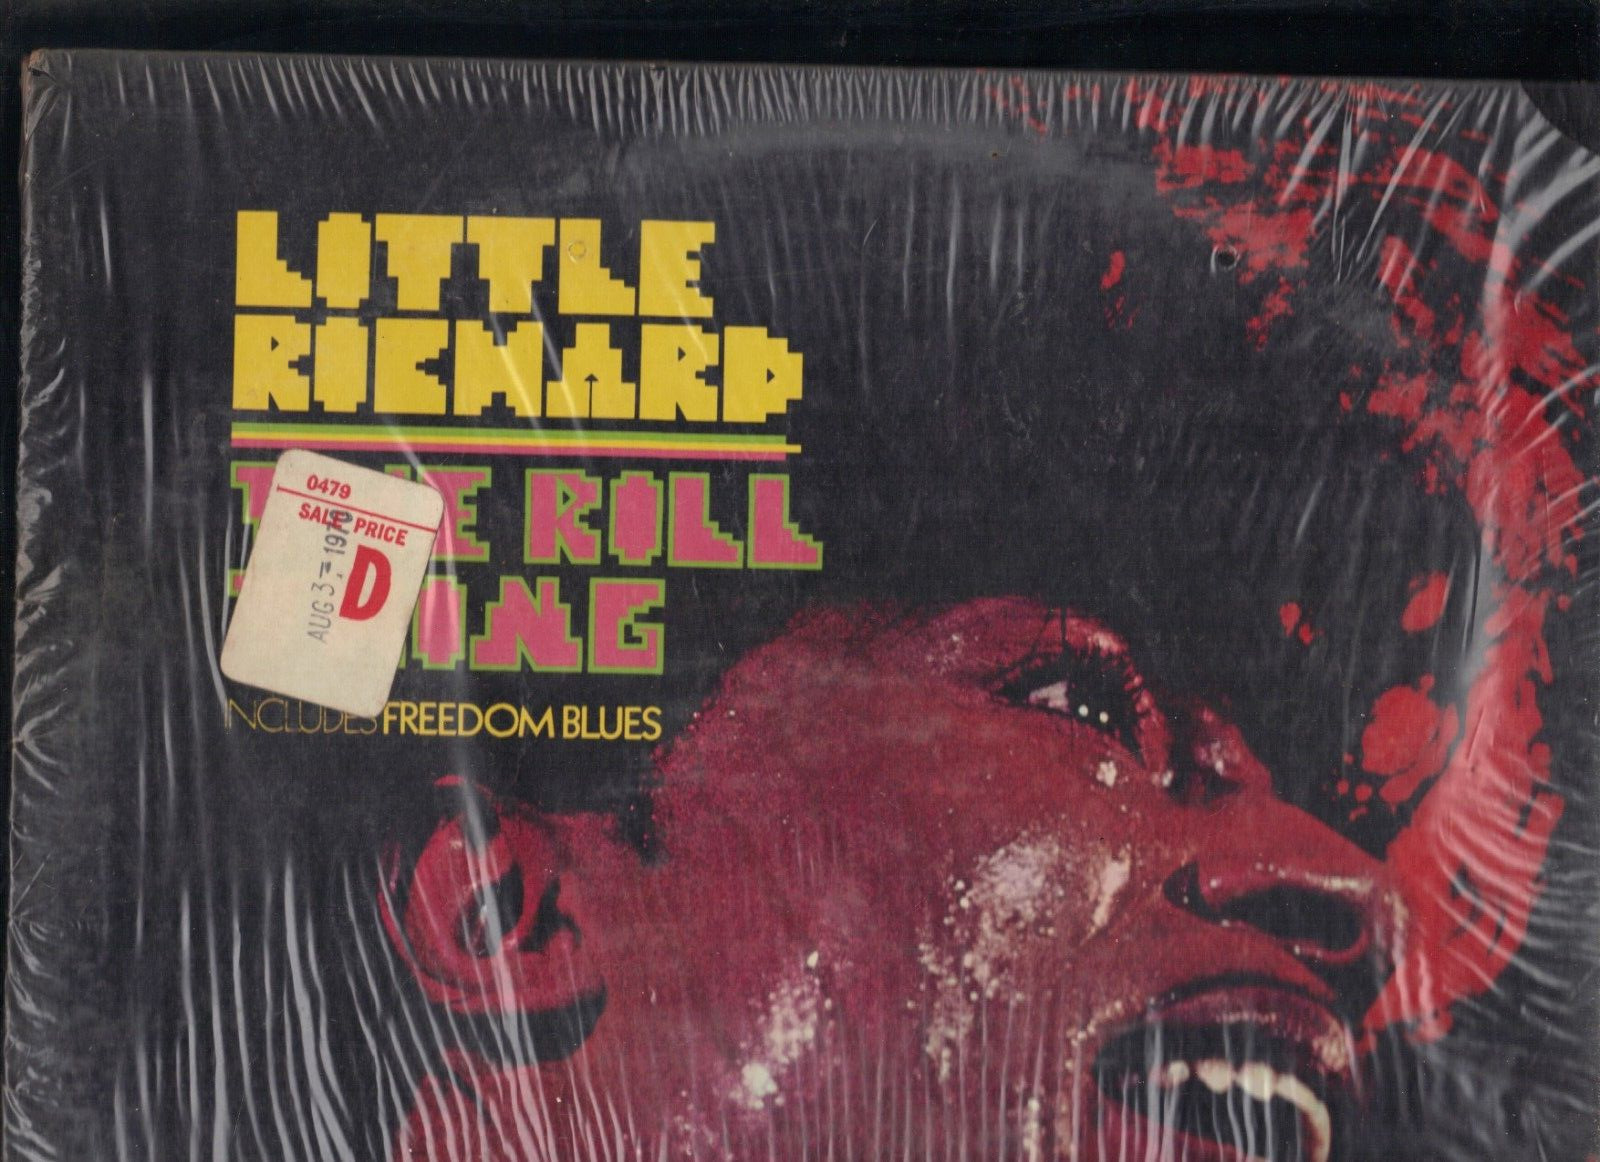 LITTLE RICHARD - The Rill Thing - REPRISE 70s R&B soul rock LP - NICE shrink